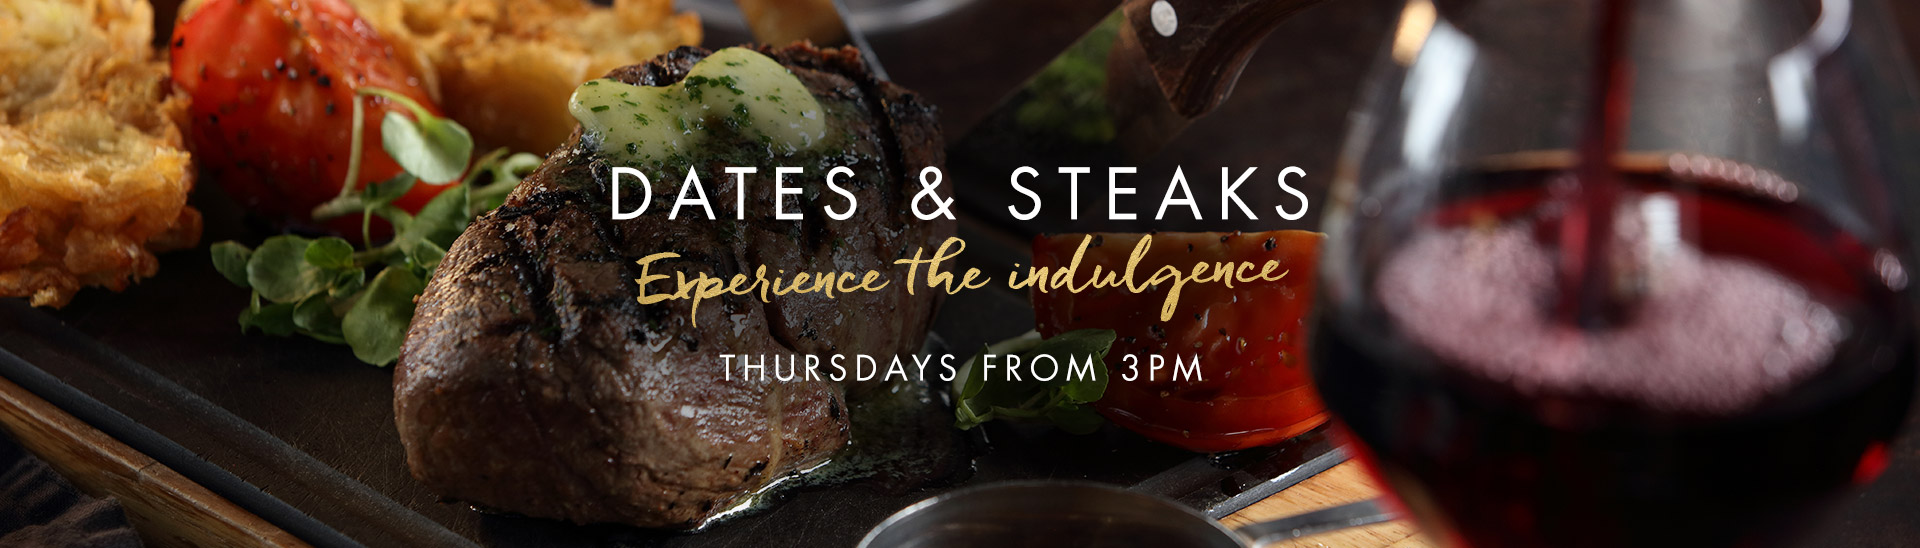 Dates & Steaks at Miller & Carter Lytham St Annes